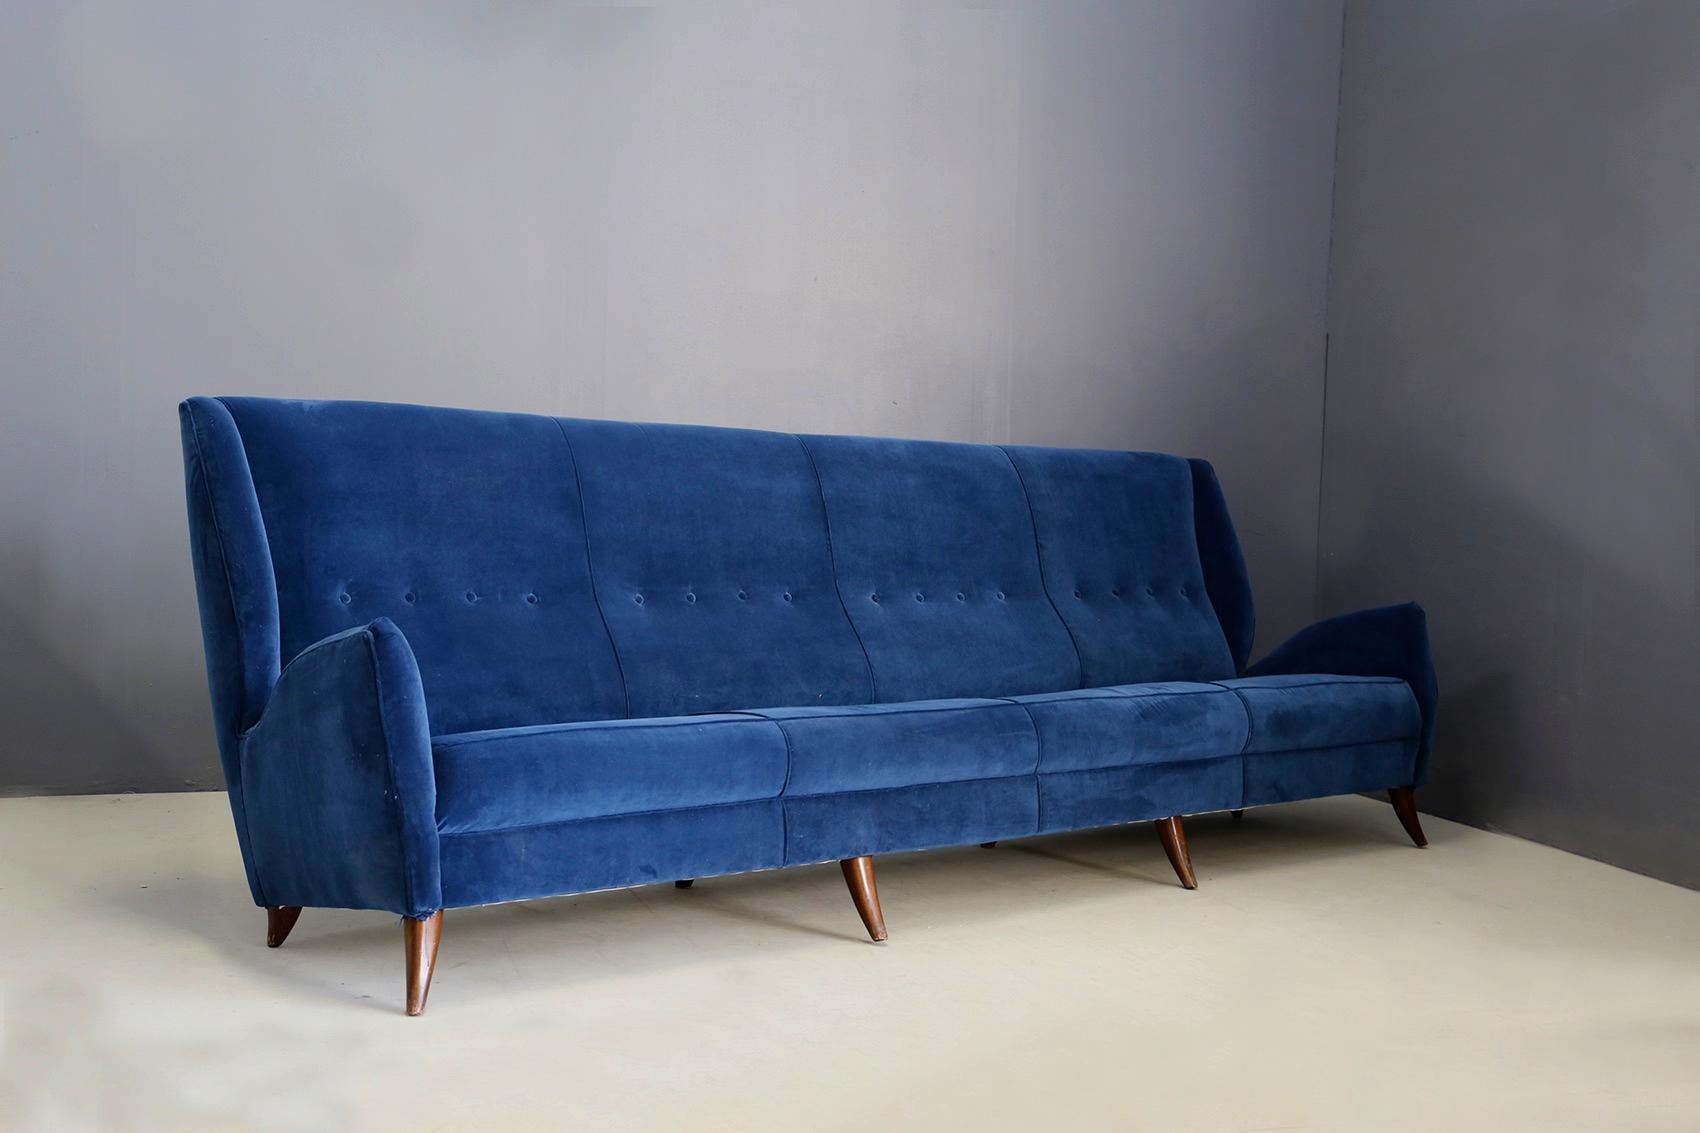 Mid-Century Modern Sofa attributed to Gio Ponti for Isa Bergamo in Blue Velvet, Restored 1950s